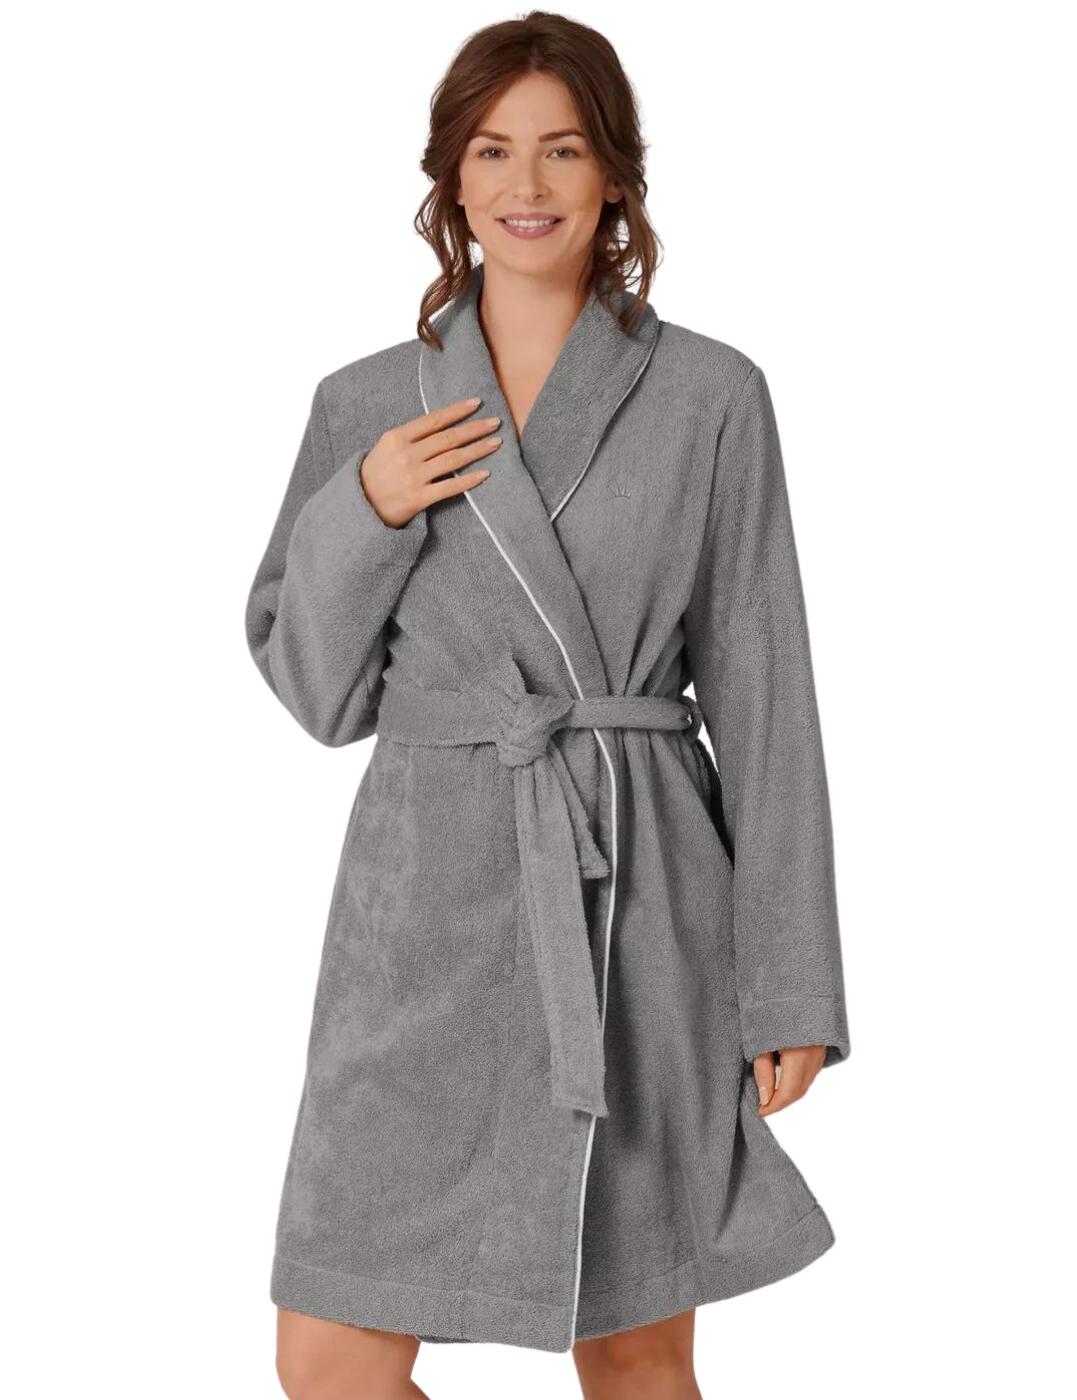 SCOOVY Soft Men Lounge Sleepwear Nightwear For Men Comfort Bathrobes  Dressing Gown Sleep Robes at Amazon Men's Clothing store